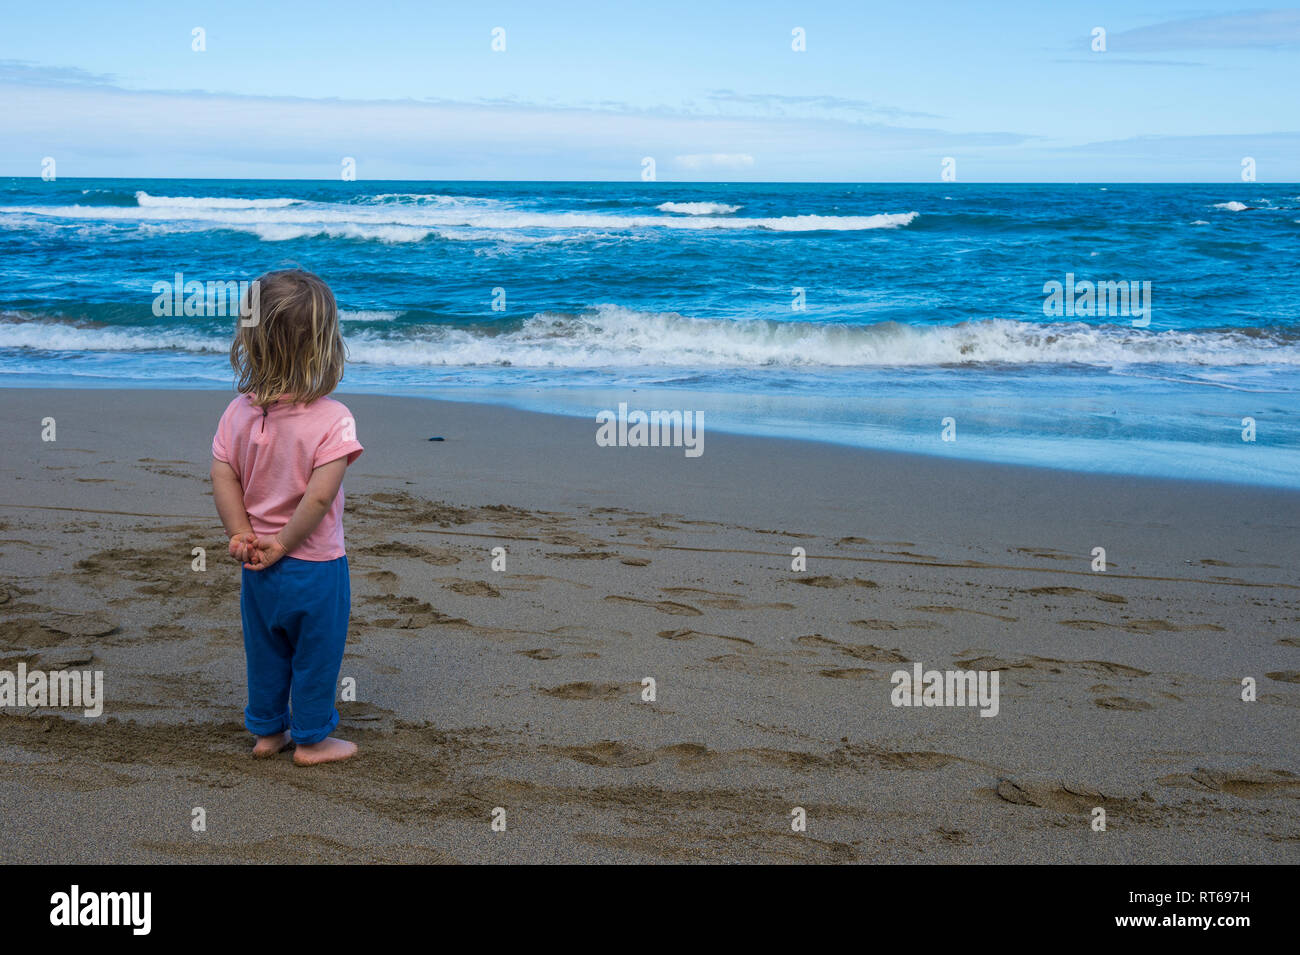 Spain, Canary Islands, Fuerteventura, La Pared, Playa del Viejo Rey, little girl standing on the beach Stock Photo